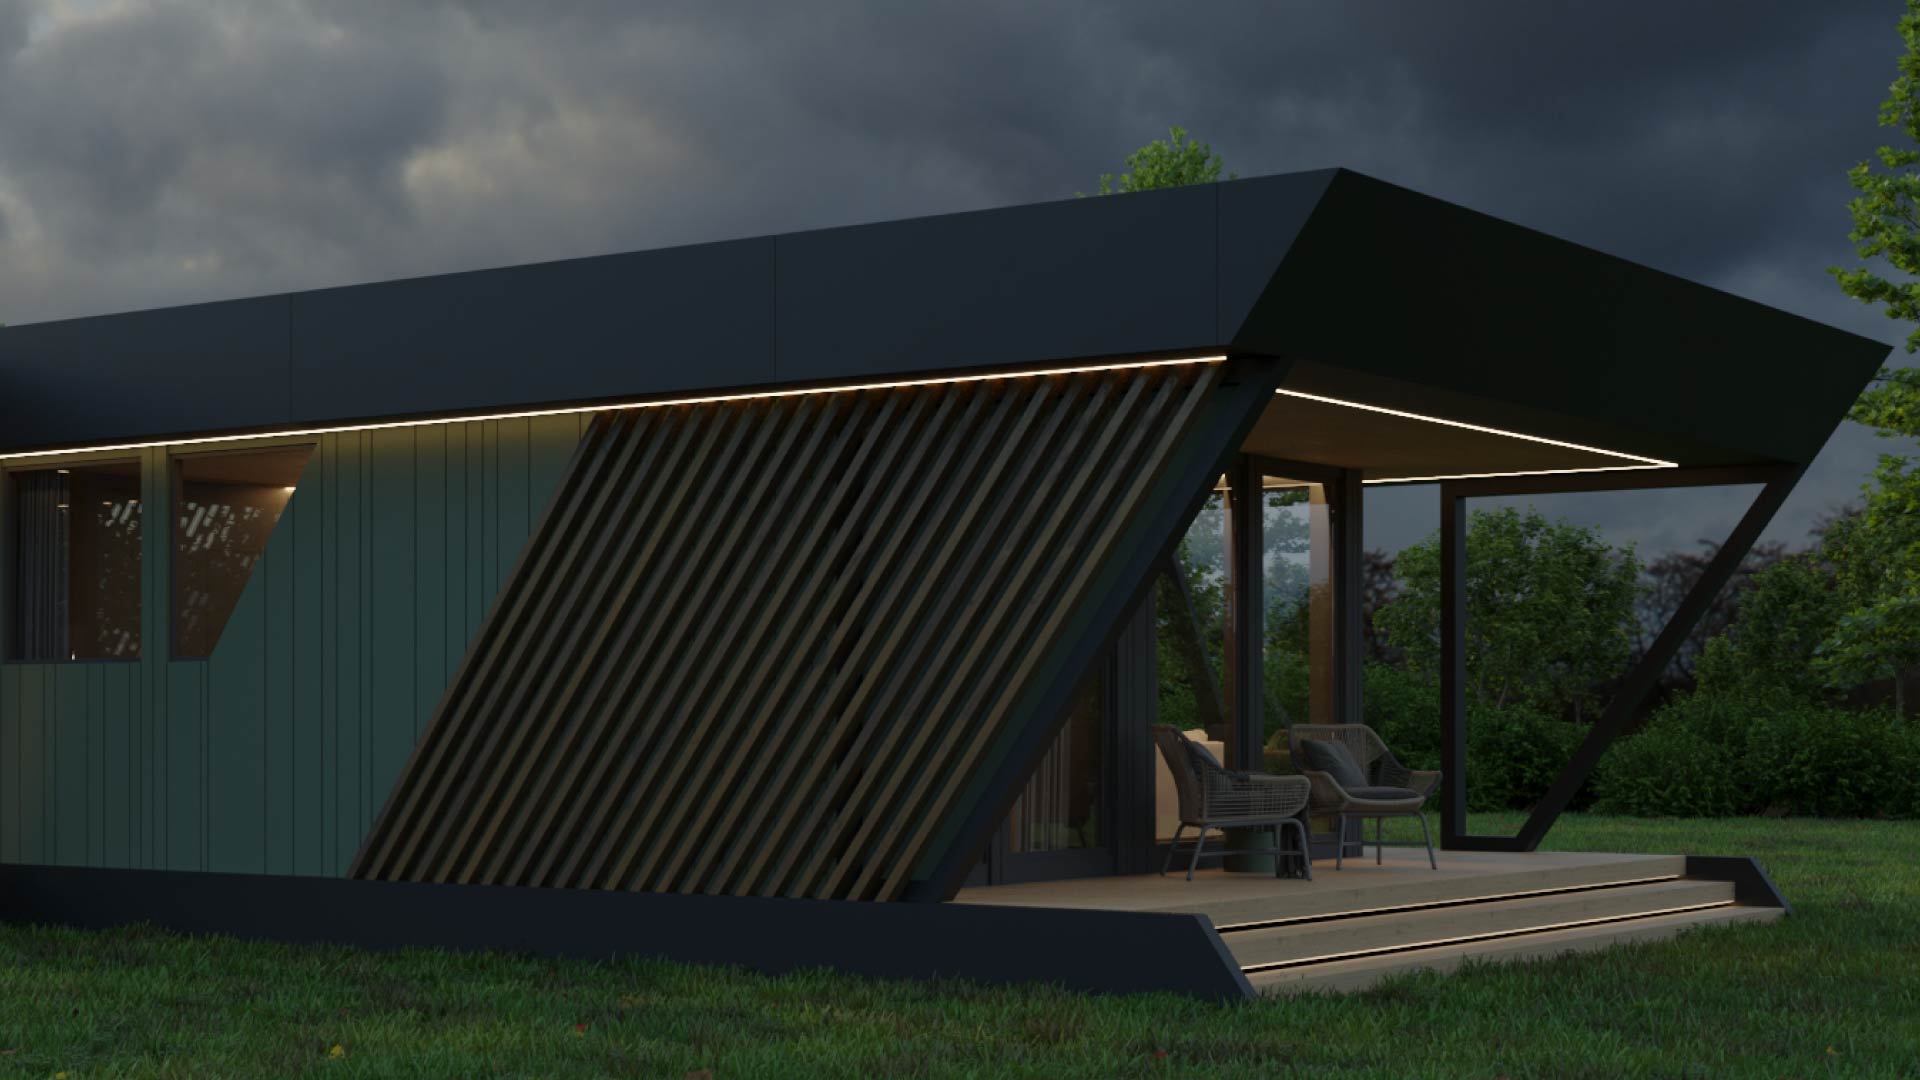 dark, moody image of a homers modular home